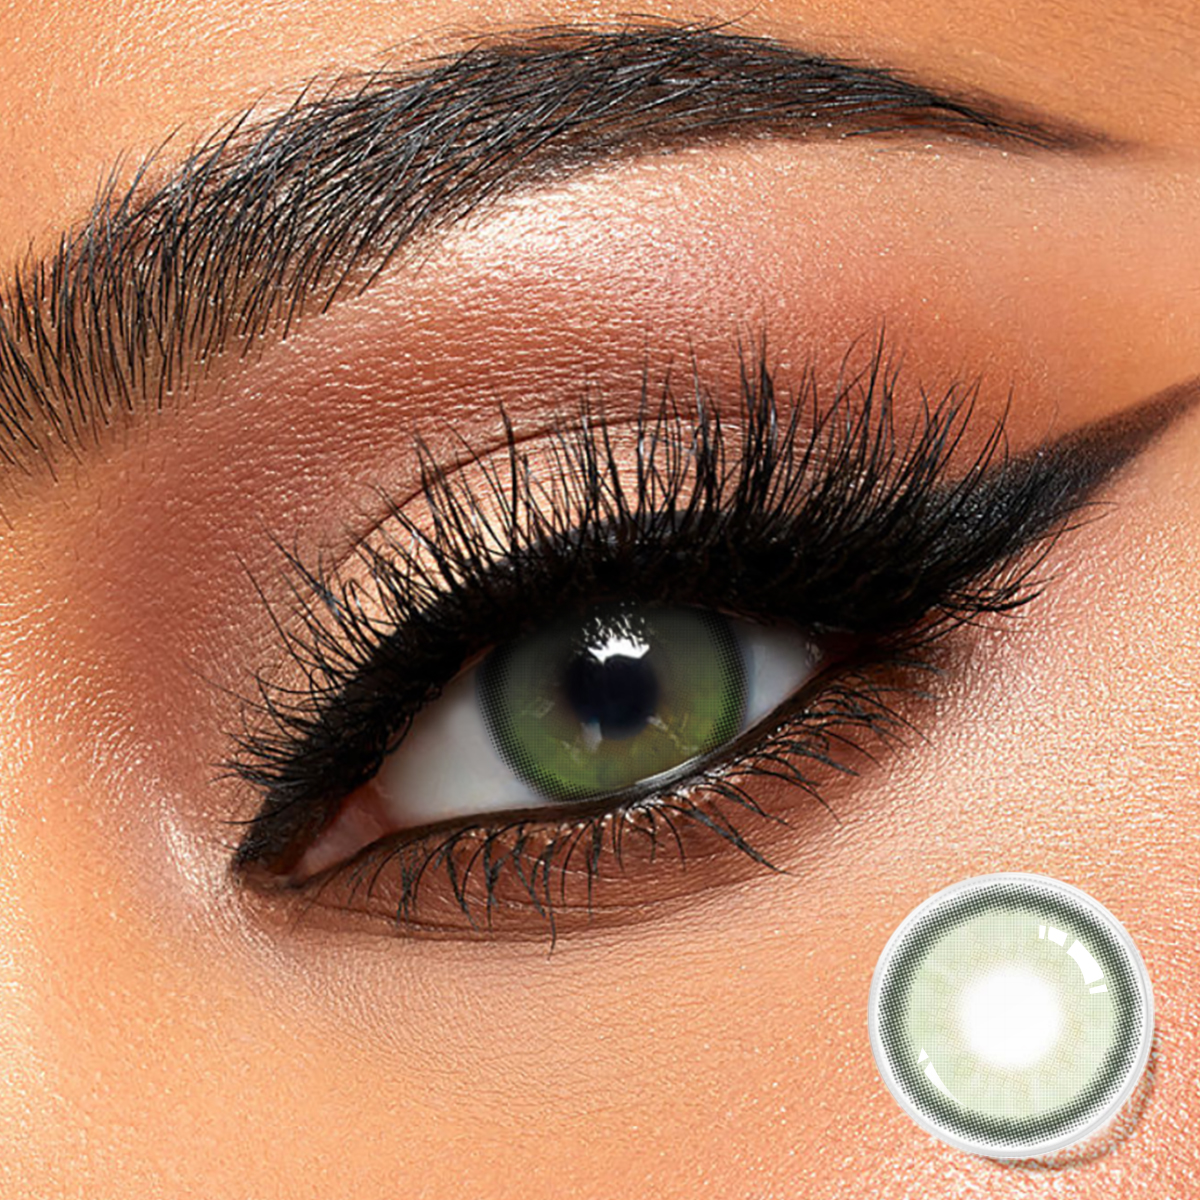 2023 lentes de contacto סגנון חדש עיניים טבעיות עדשות צבעוניות עיניים קוסמטיות עדשות מגע צבעוניות